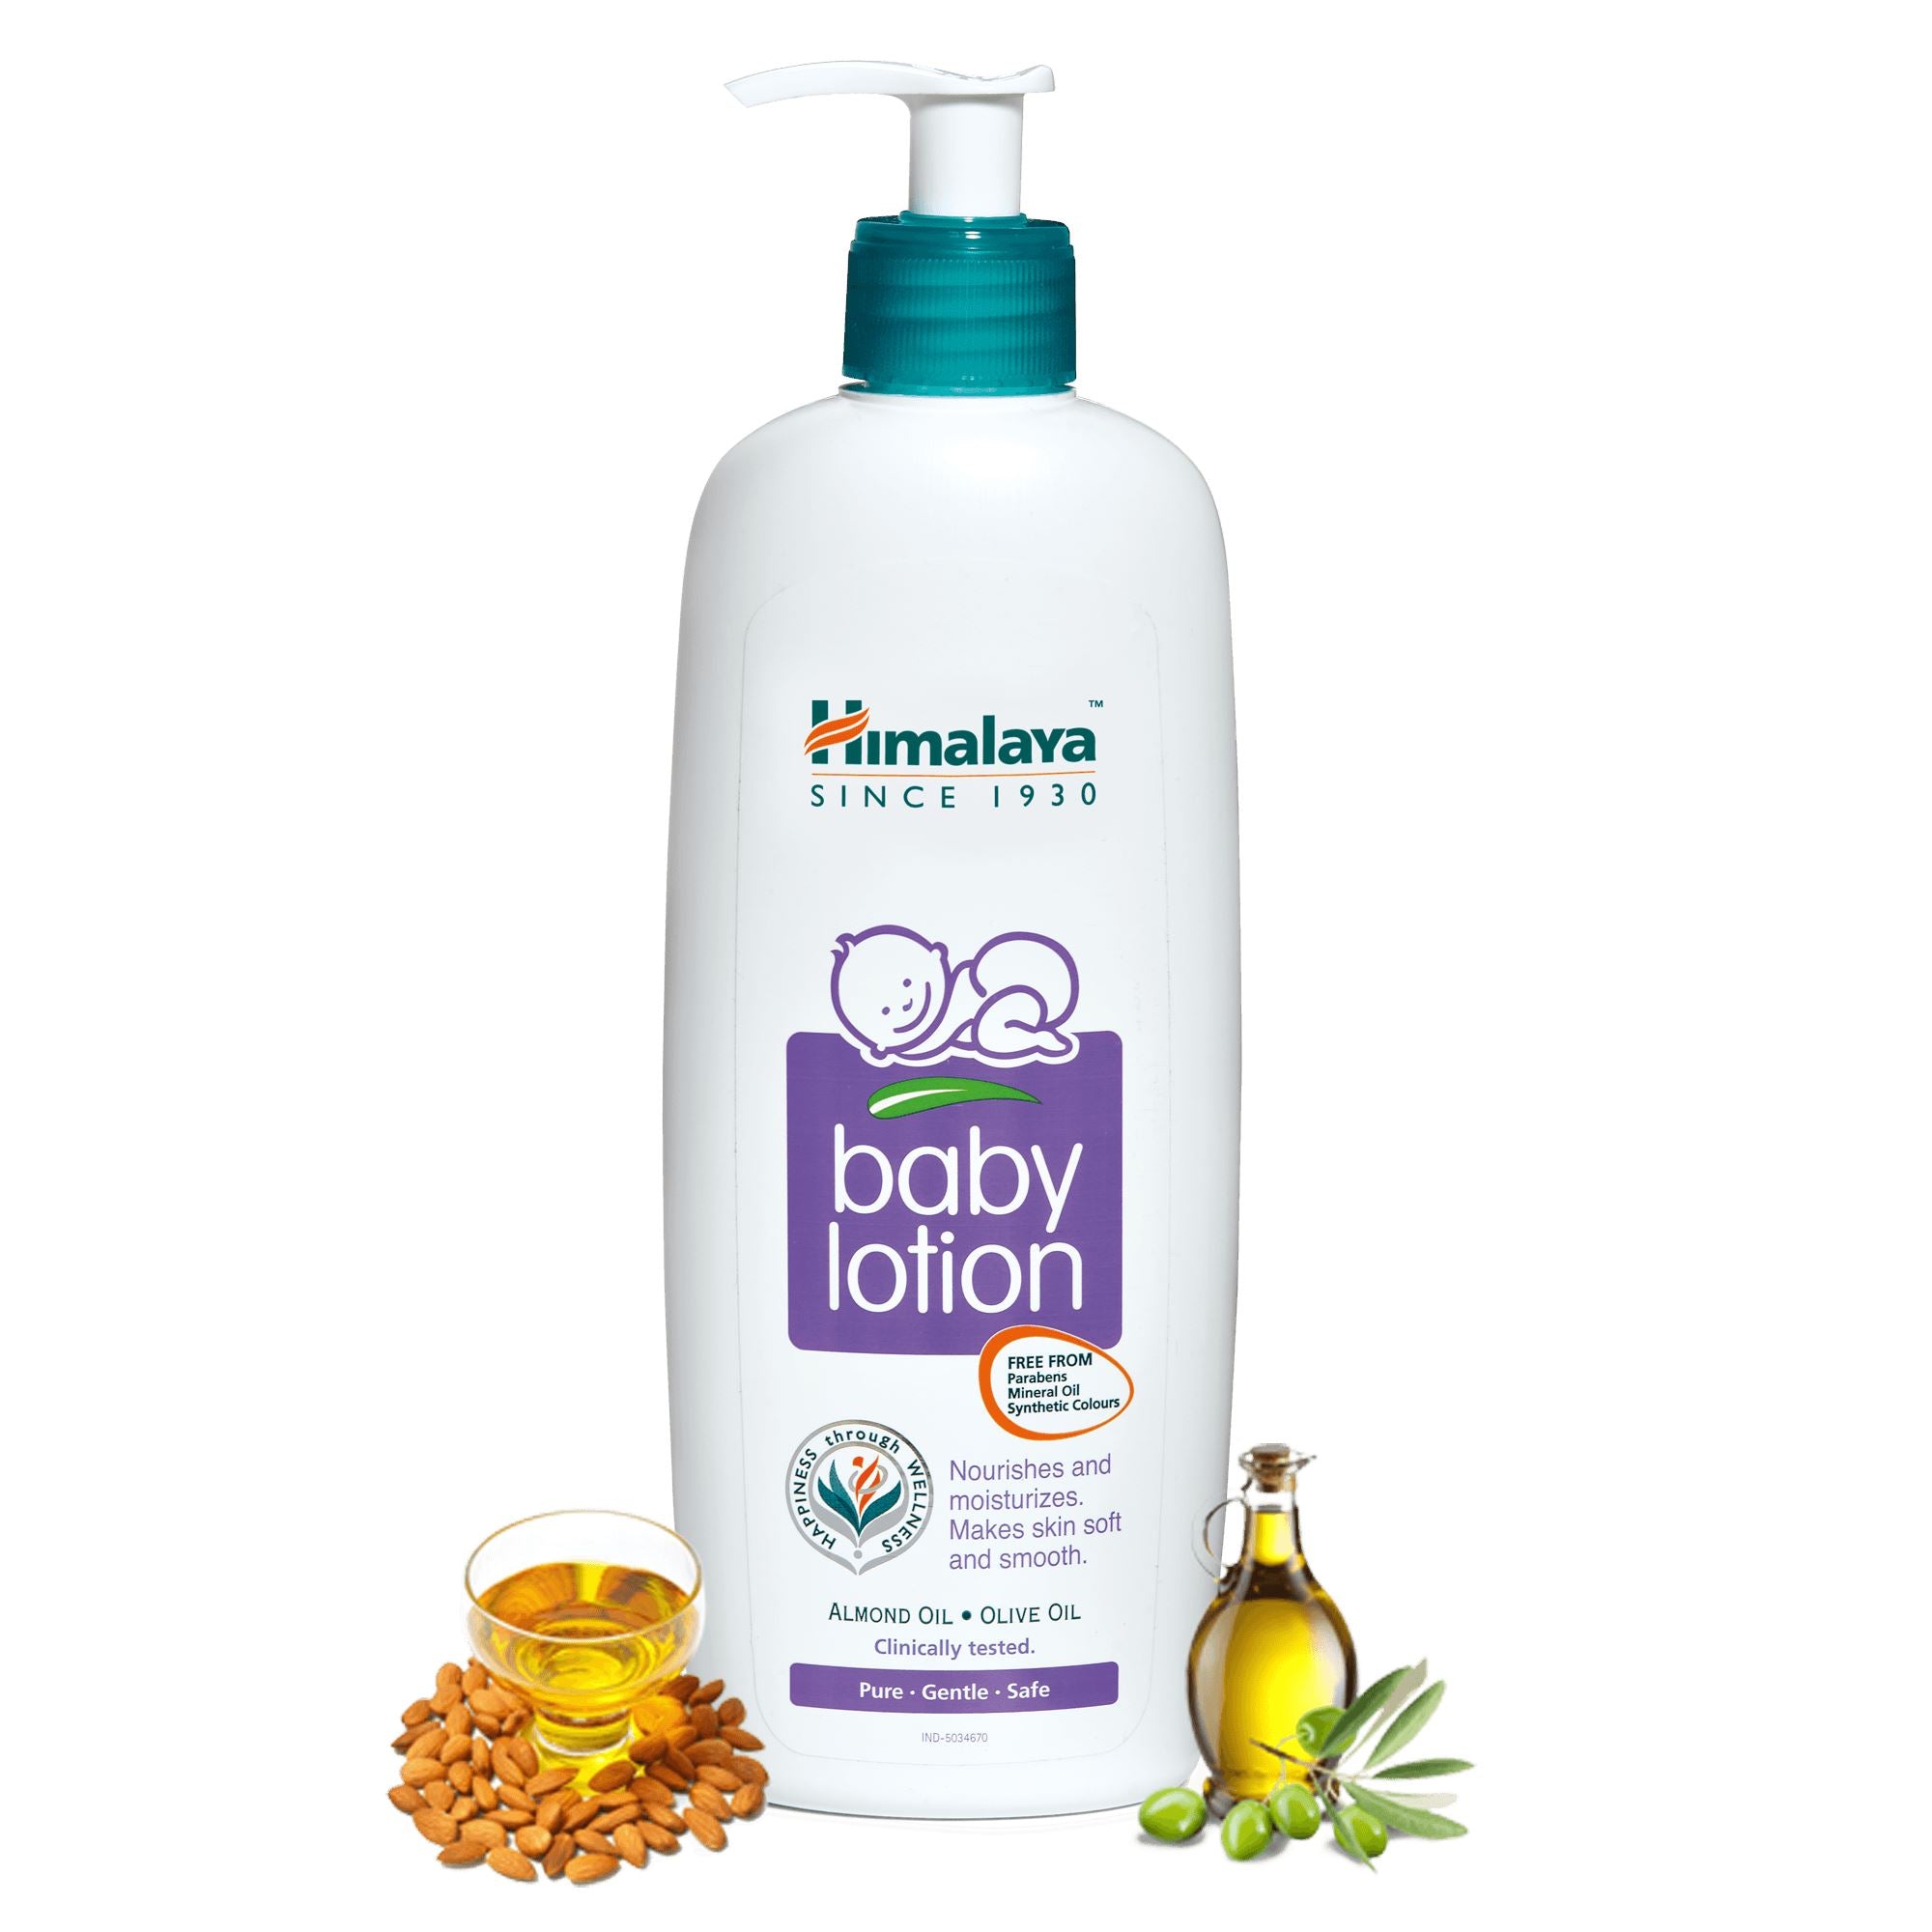 Himalaya Baby Lotion - To keep baby's skin soft and supple